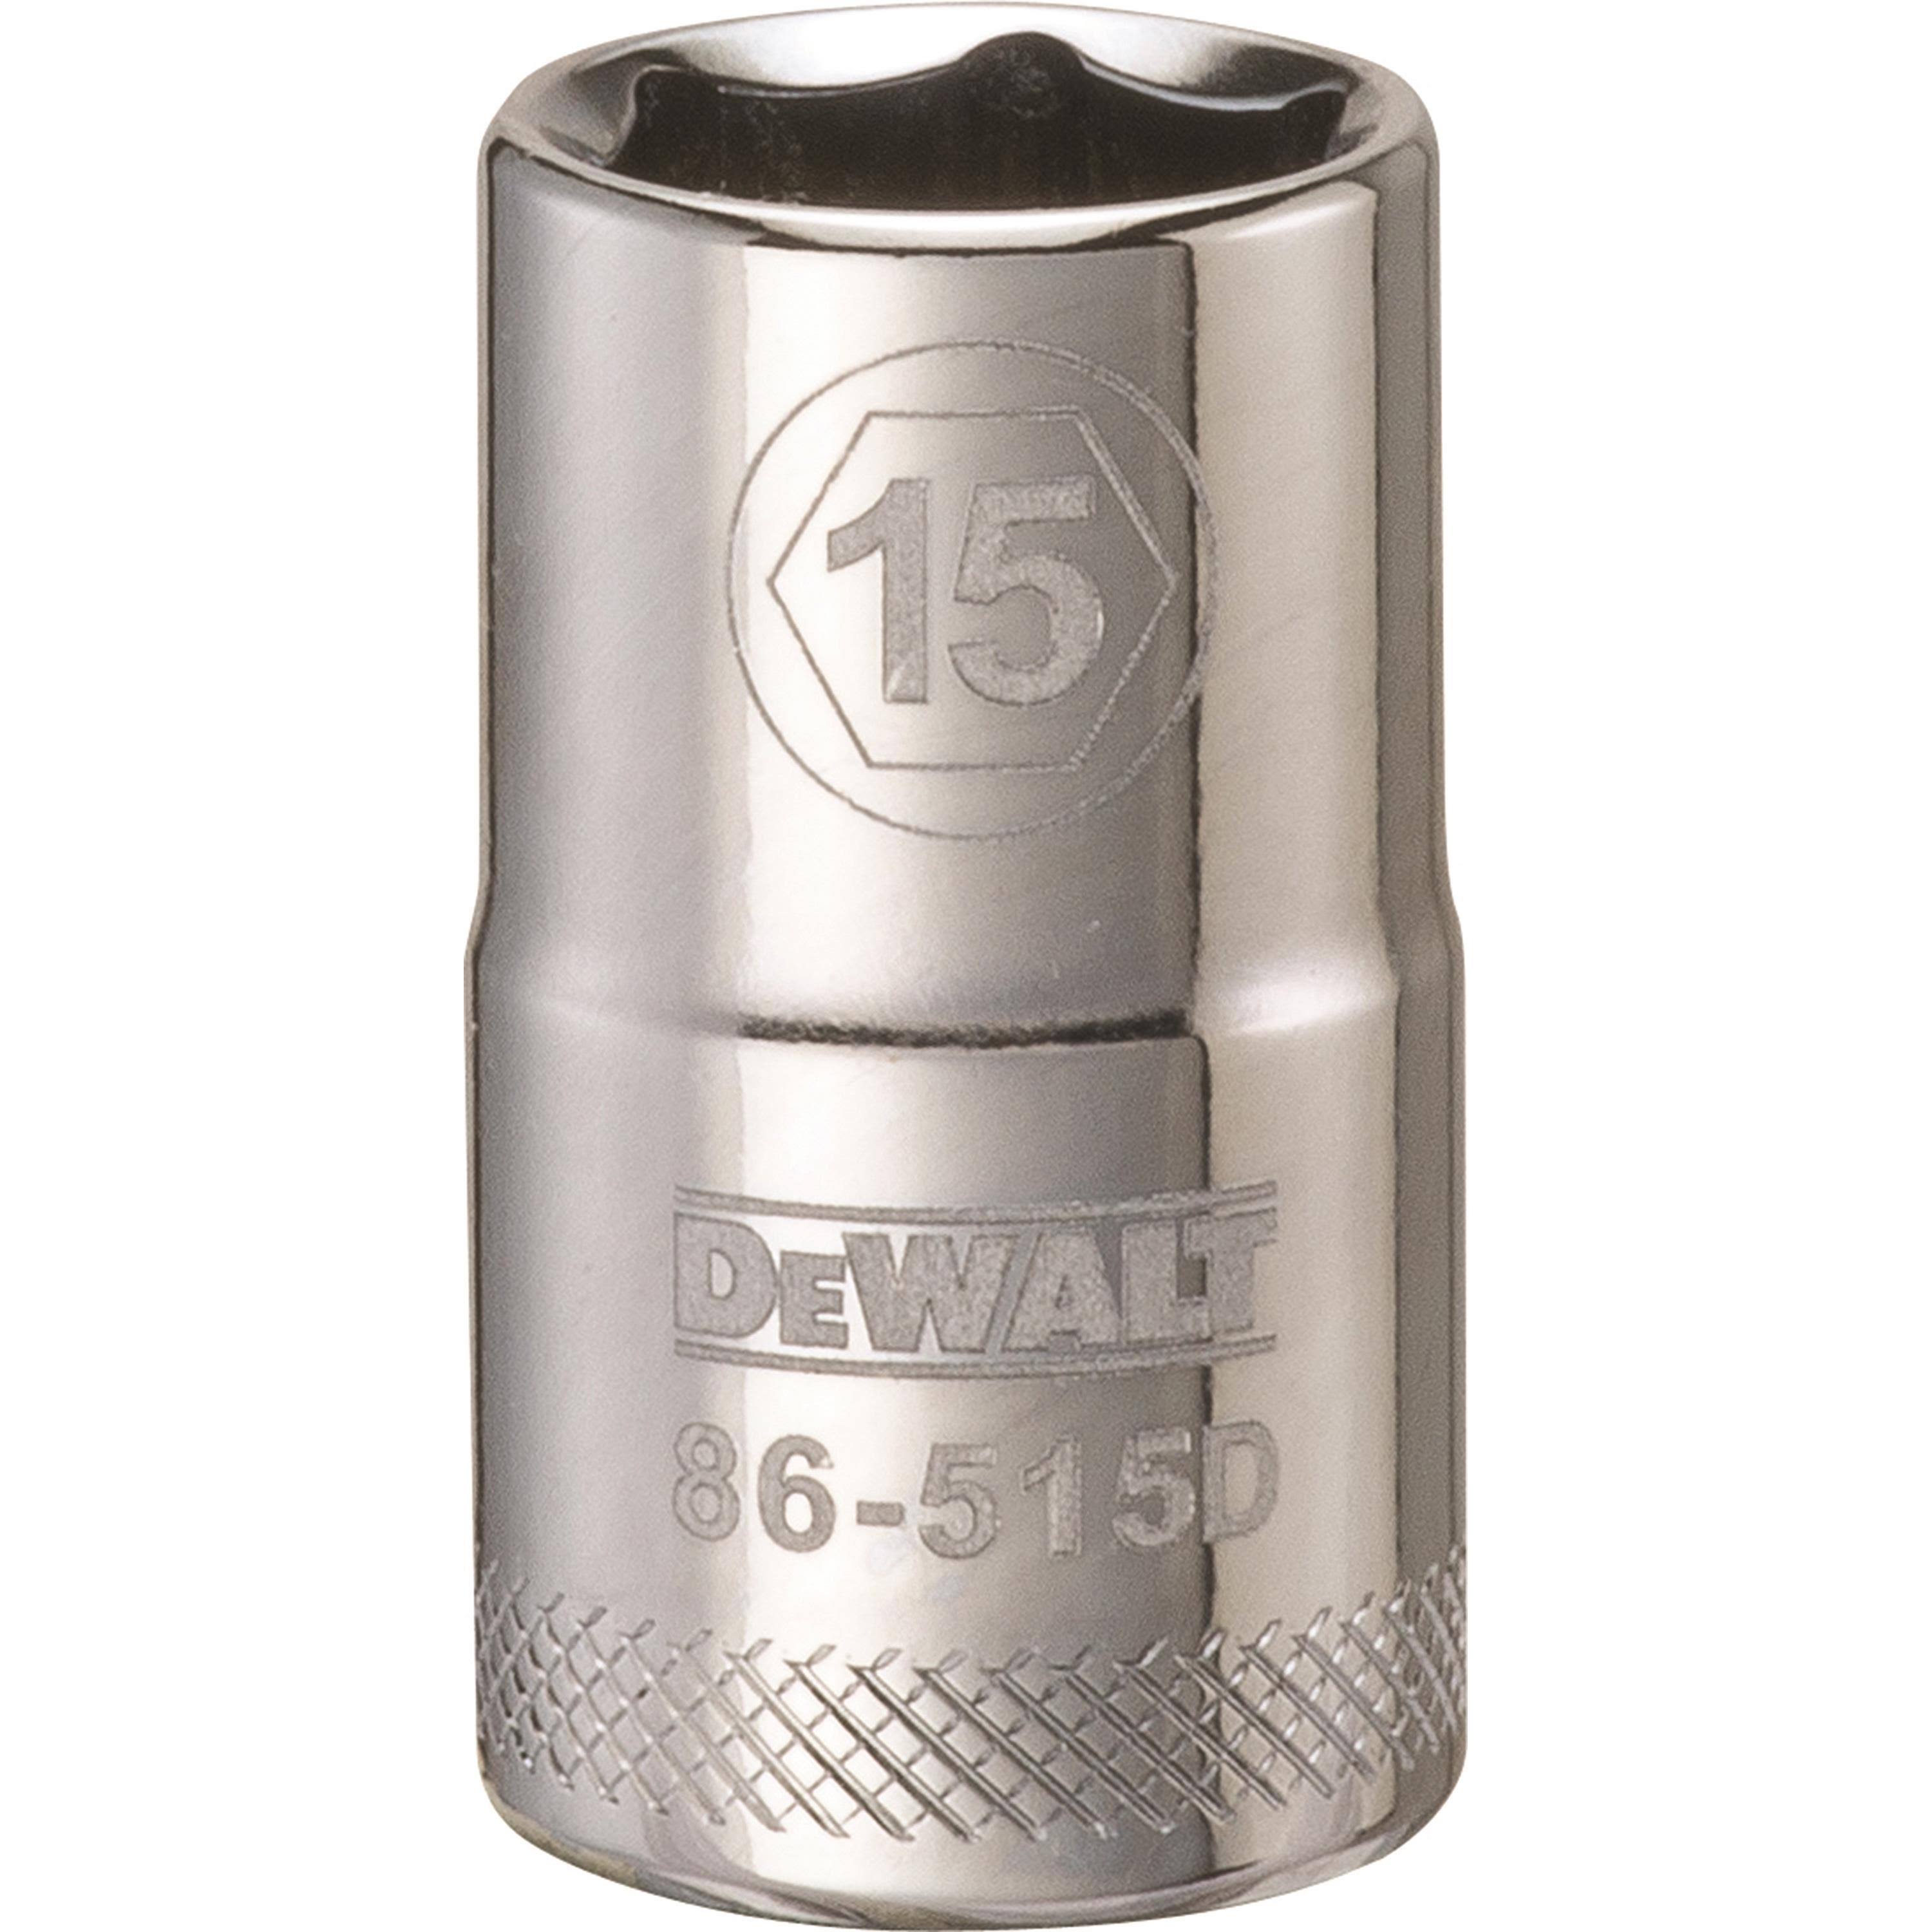 Stanley Tools Dwmt86515osp Socket - 1/2" Drive, 6PT, 15mm